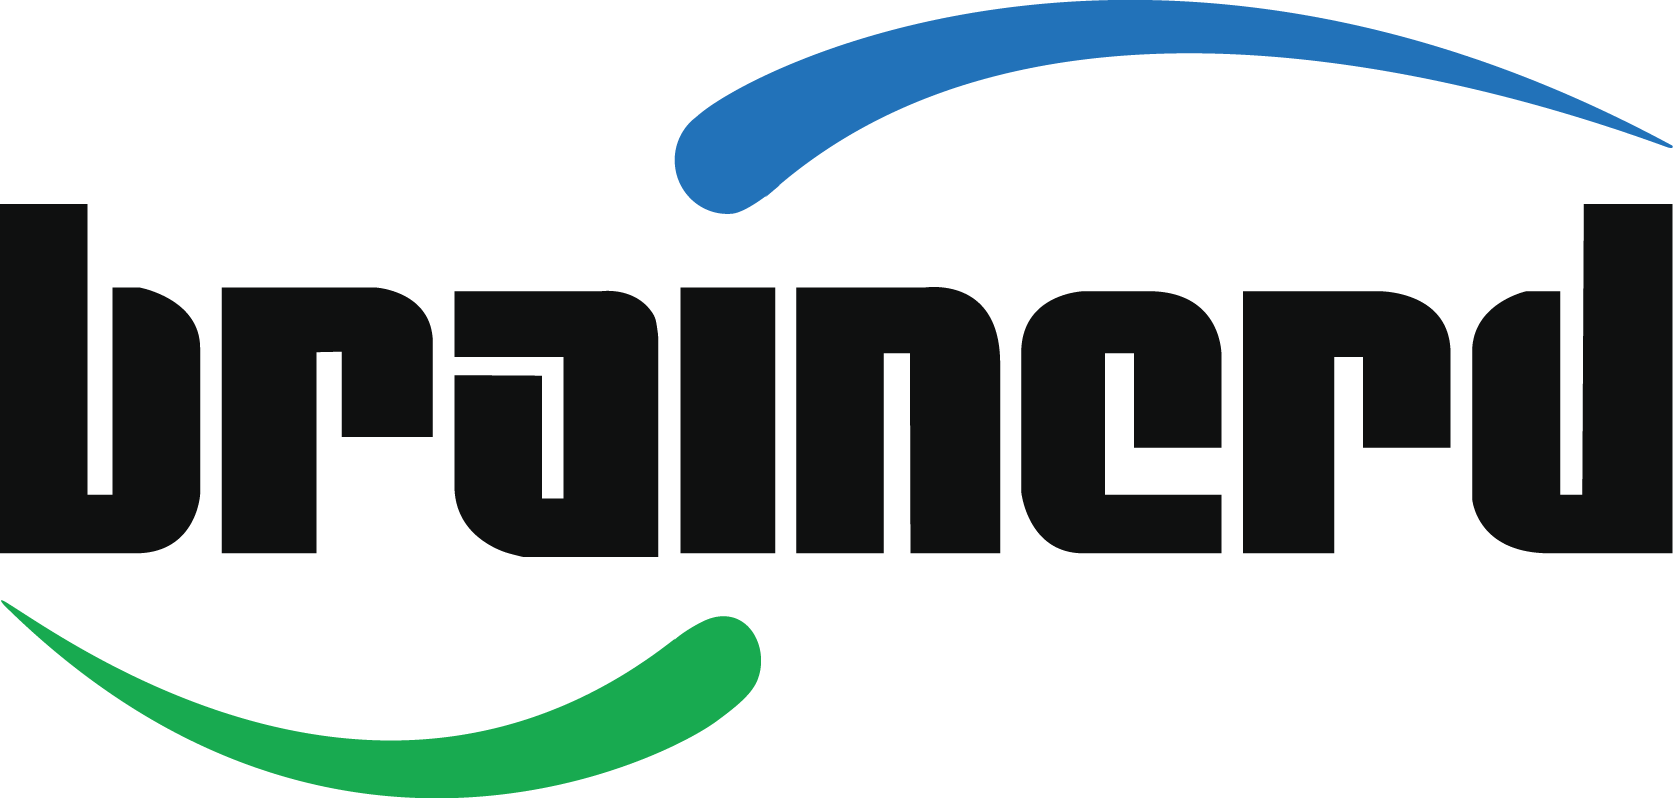 Brainerd Chemical Company, Inc. logo